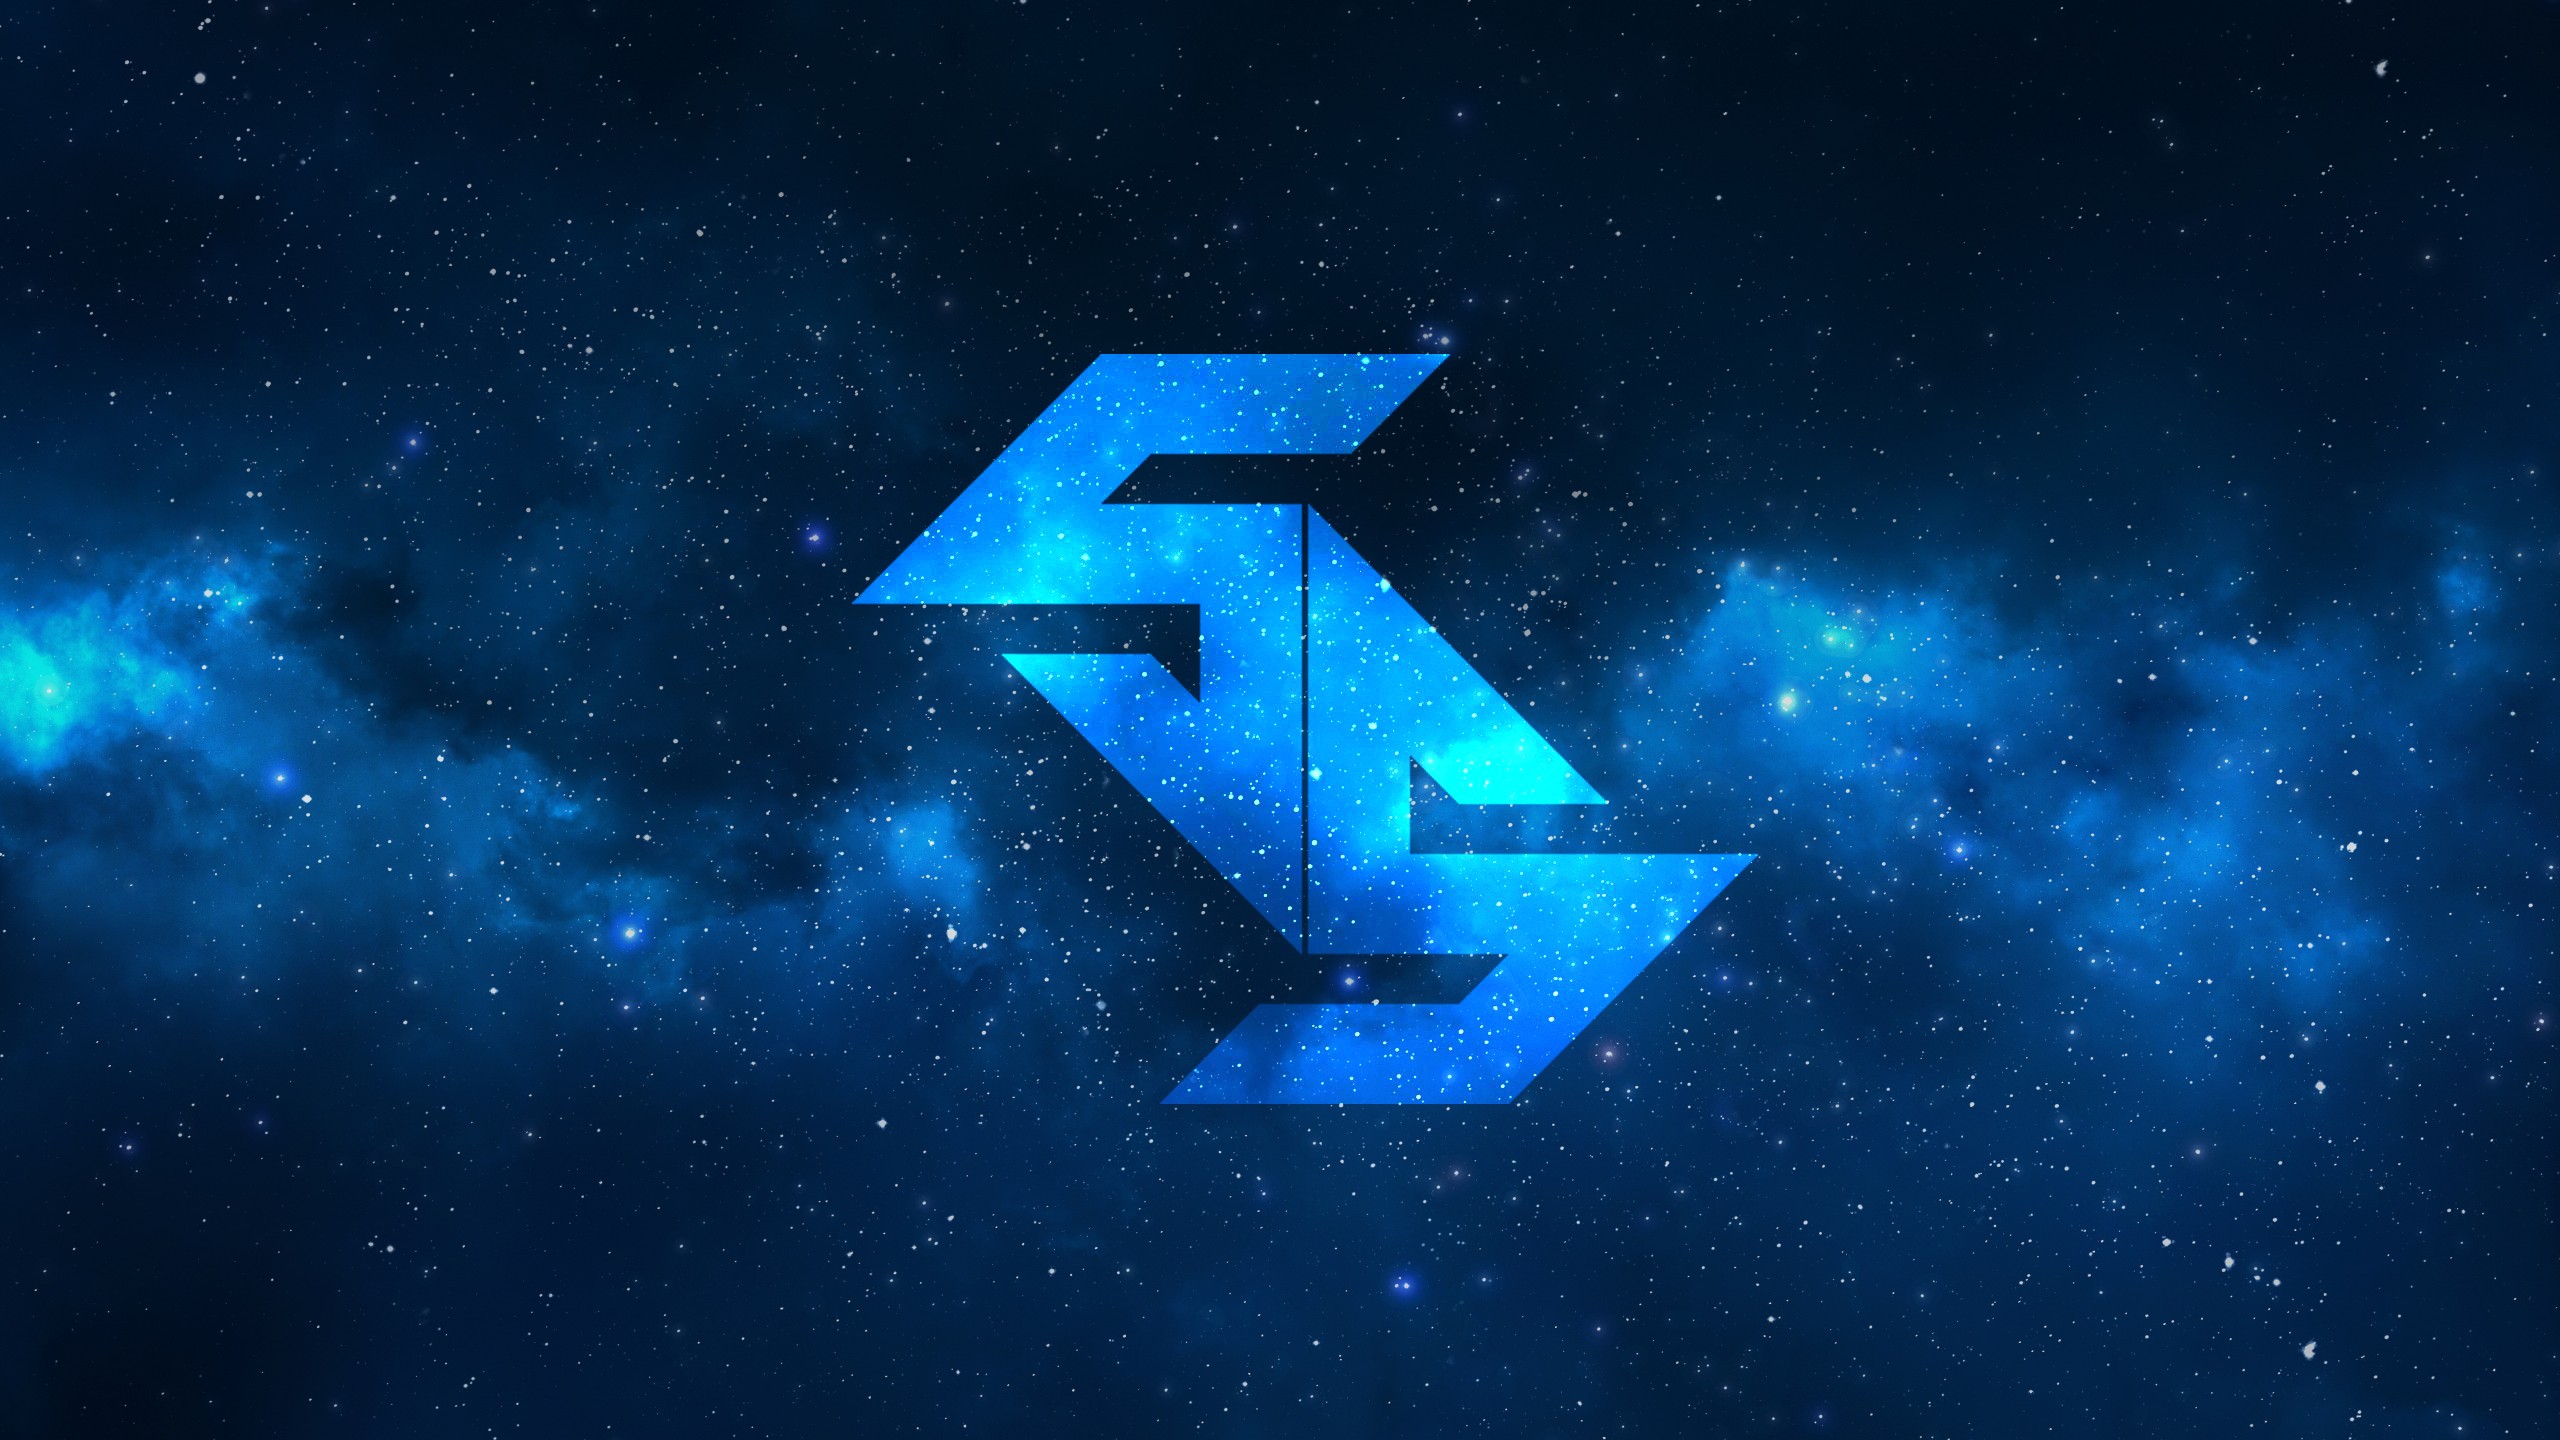 spes salutis, Counter Strike: Global Offensive, CS:GO Team, Galaxy, Blue Wallpaper